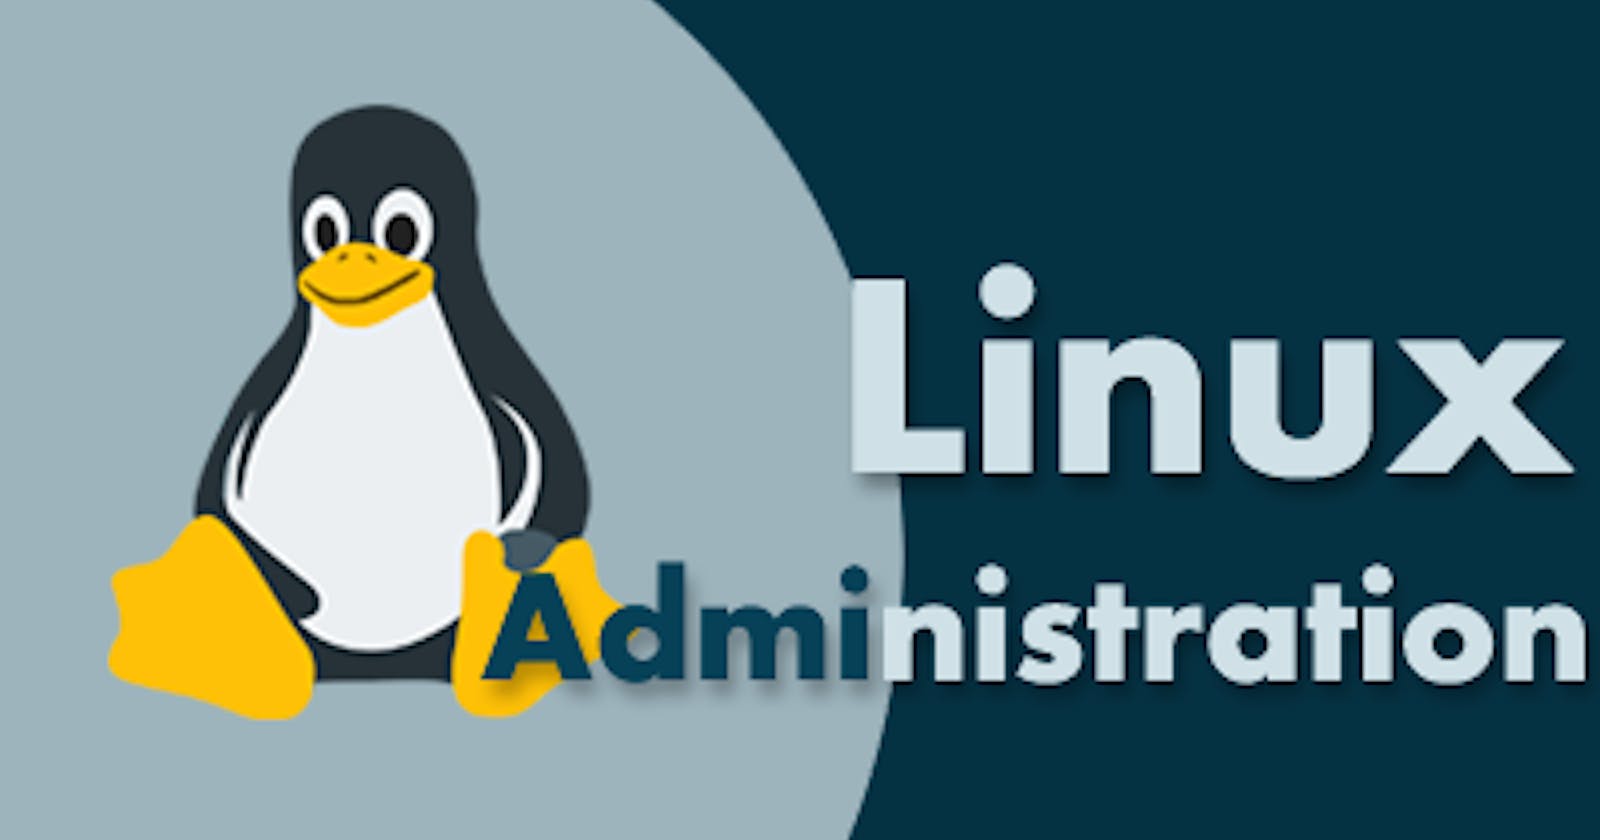 Some useful commands for a Linux Administration | DevOps tutorials